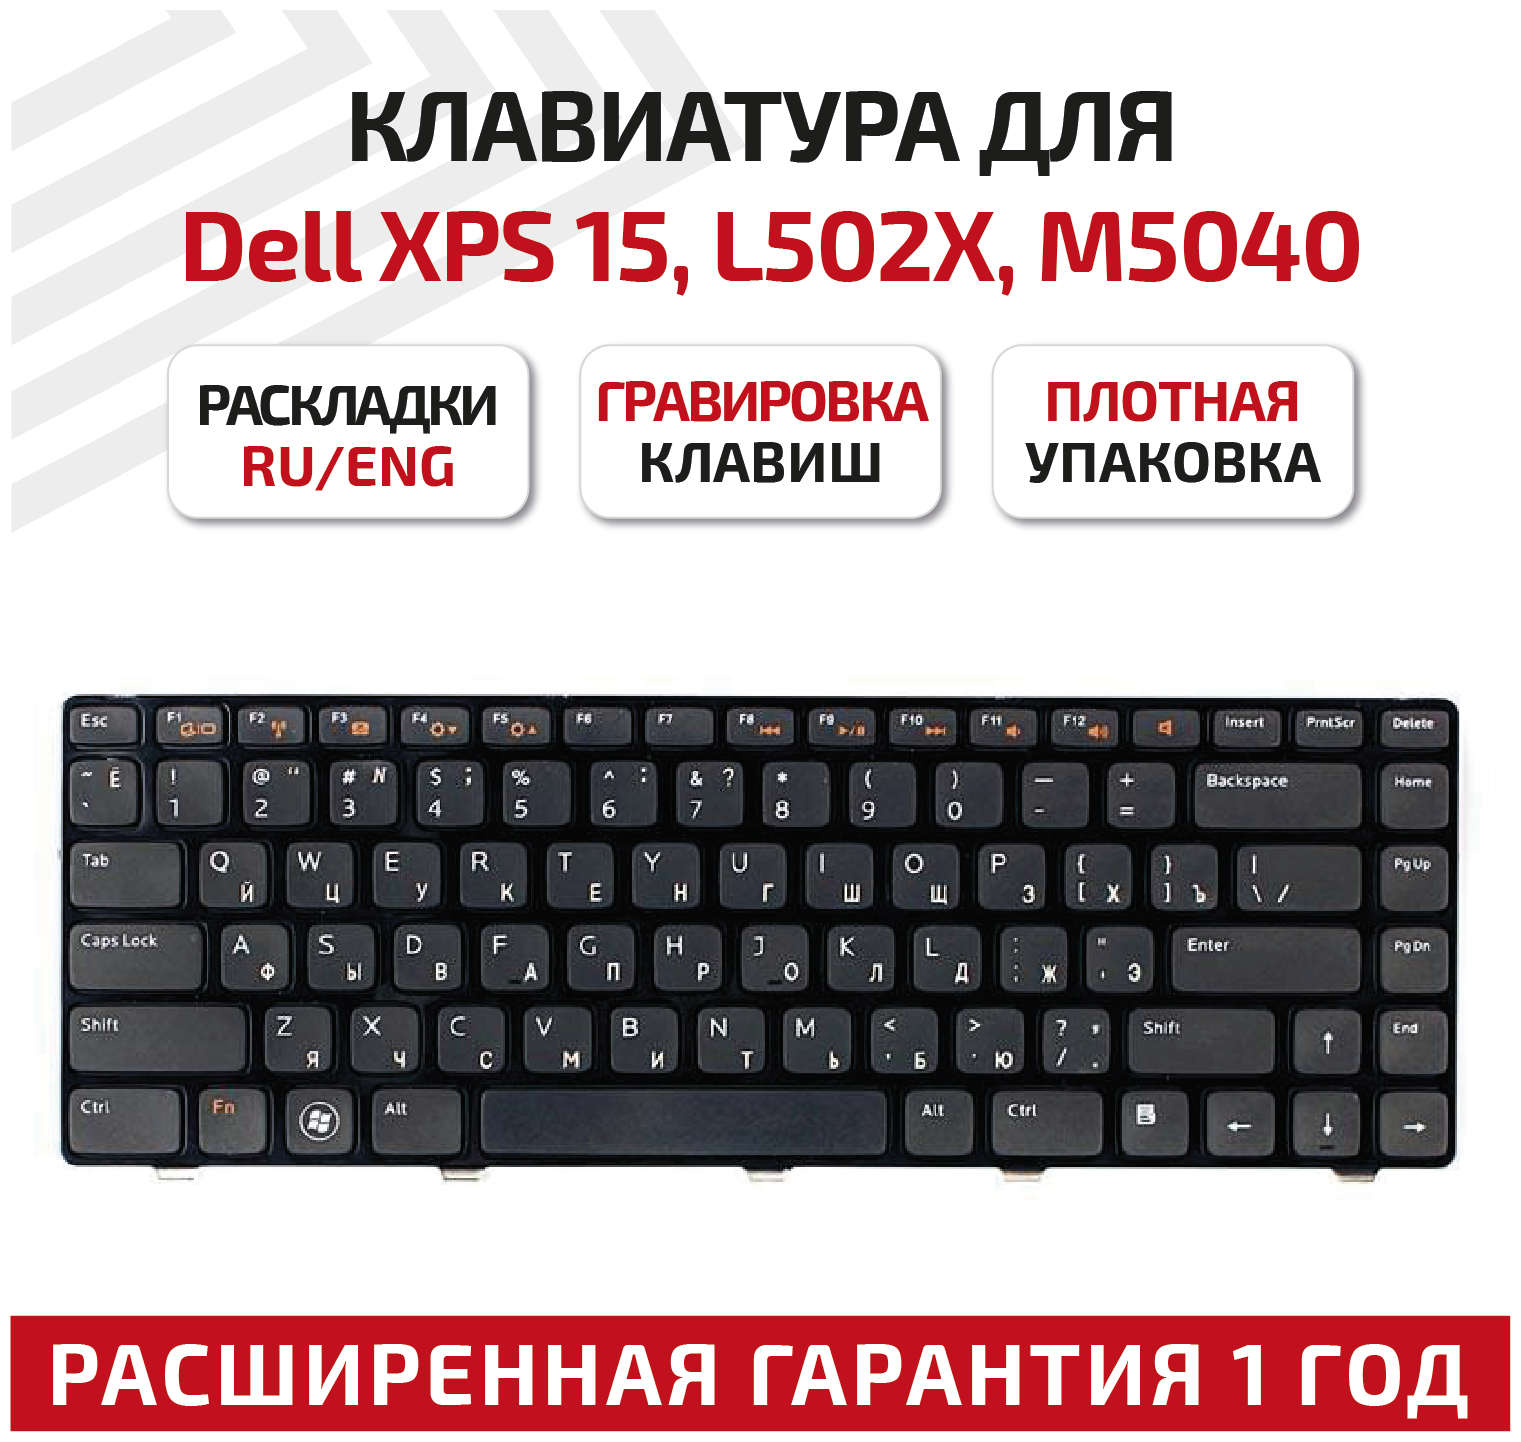 Клавиатура (keyboard) NSK-DX0SW для ноутбука Dell Inspiron 14R, M4040, M4110, M5040, M5050, M5040, N4110, N4050, Vostro 1540, 3350, 3450, черная